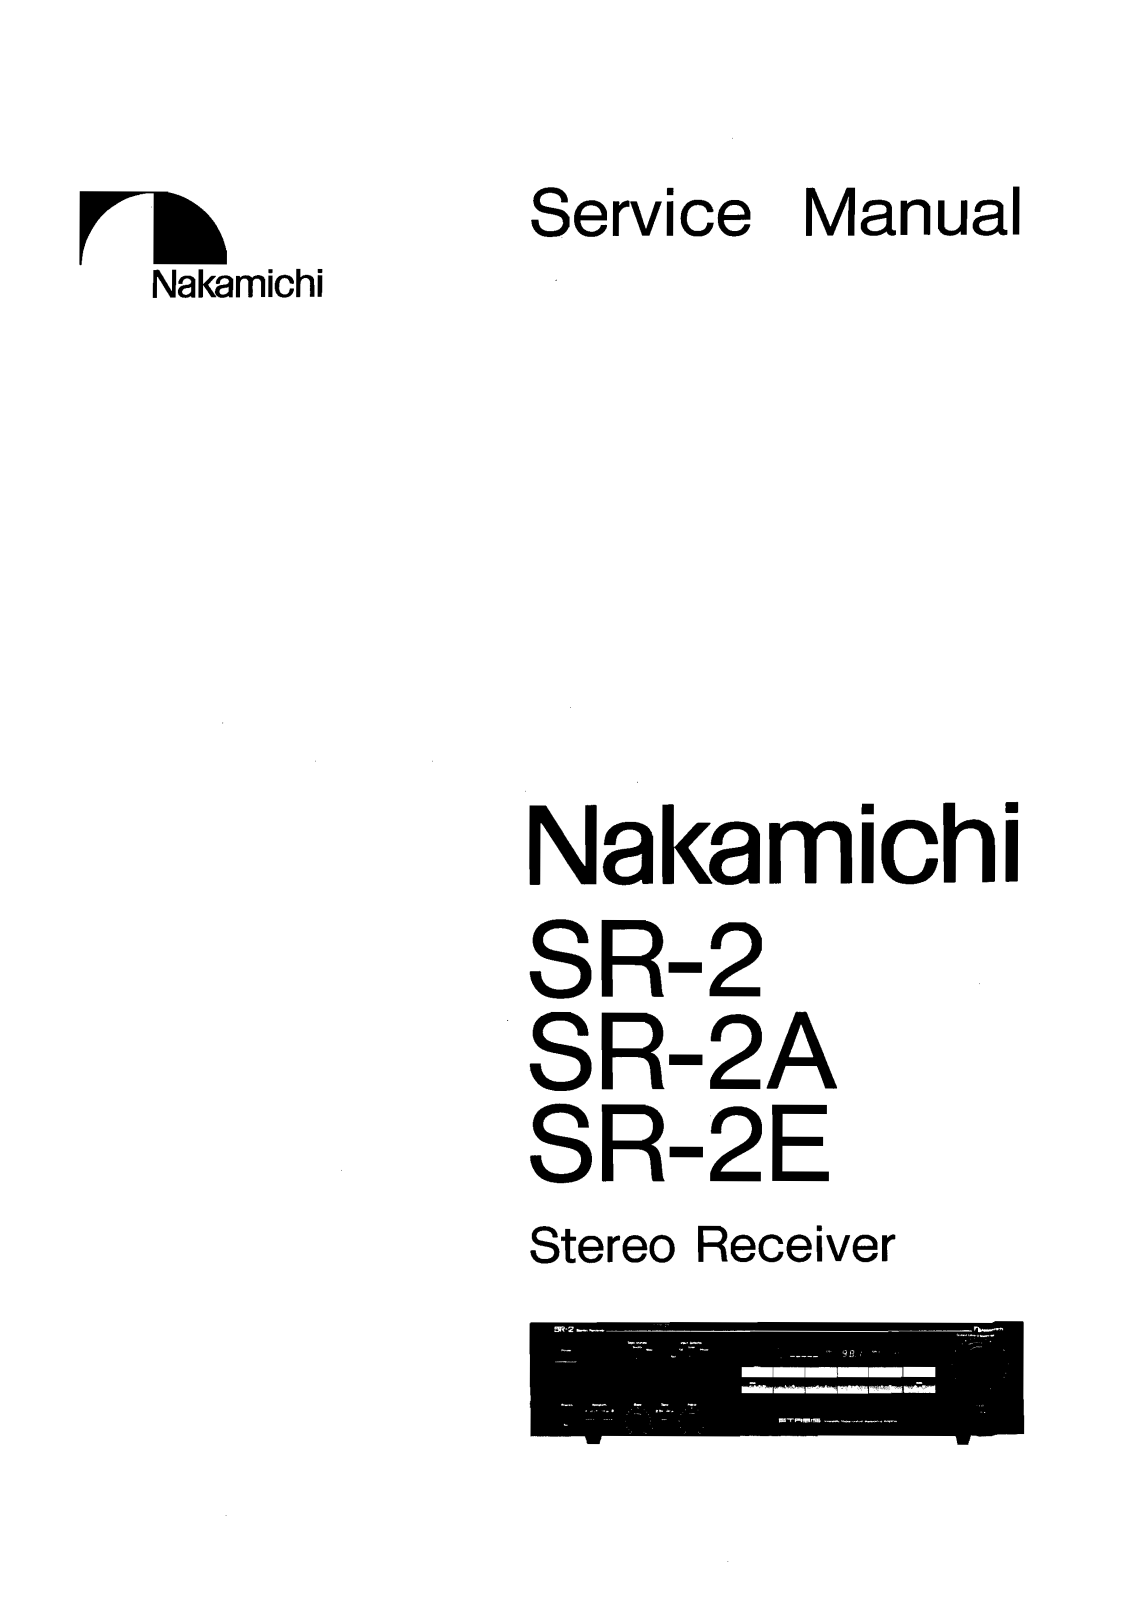 Nakamichi SR-2-E, SR-2-A, SR-2 Service Manual